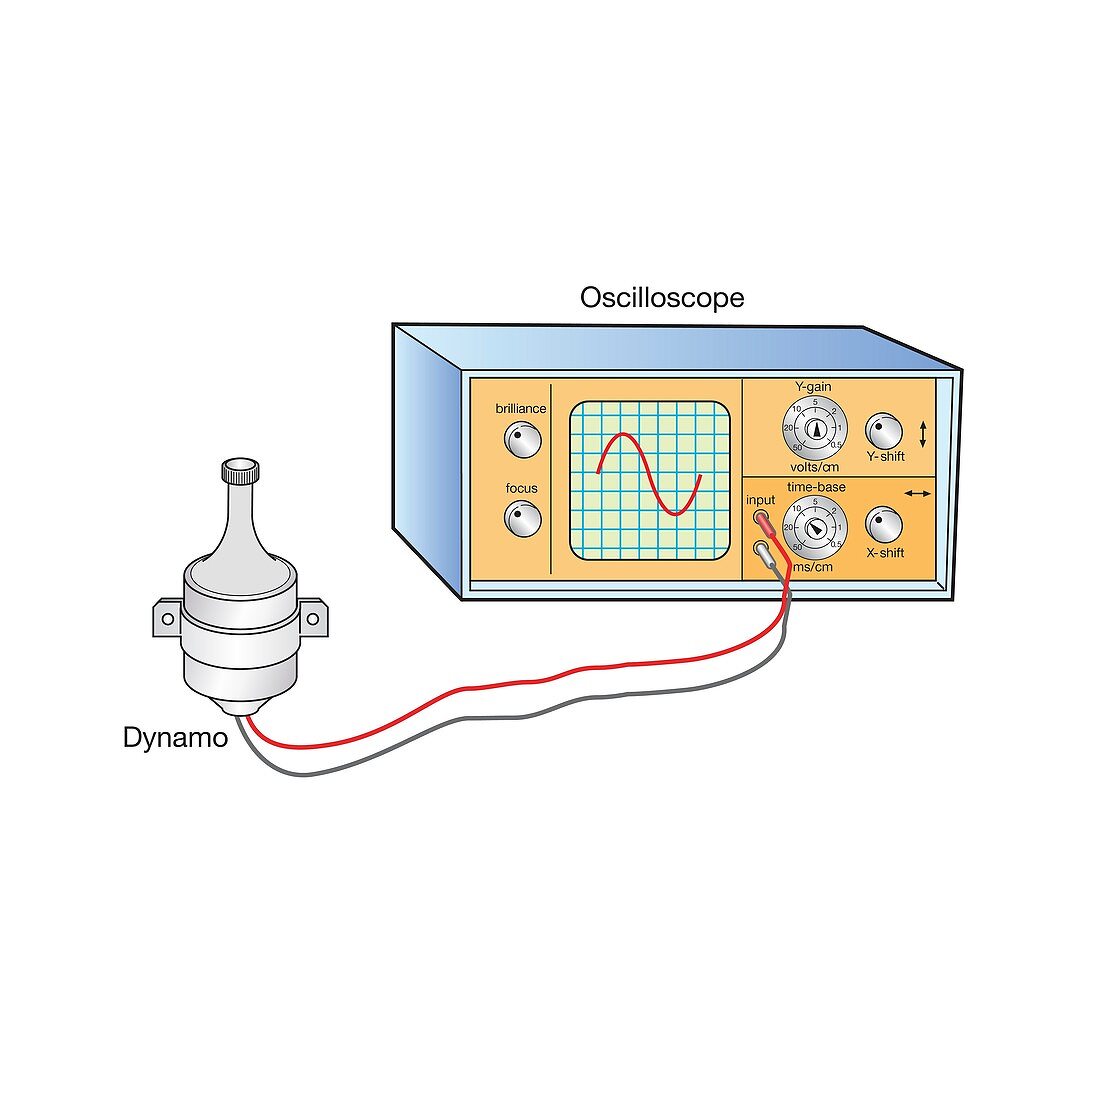 AC dynamo and oscilloscope, illustration